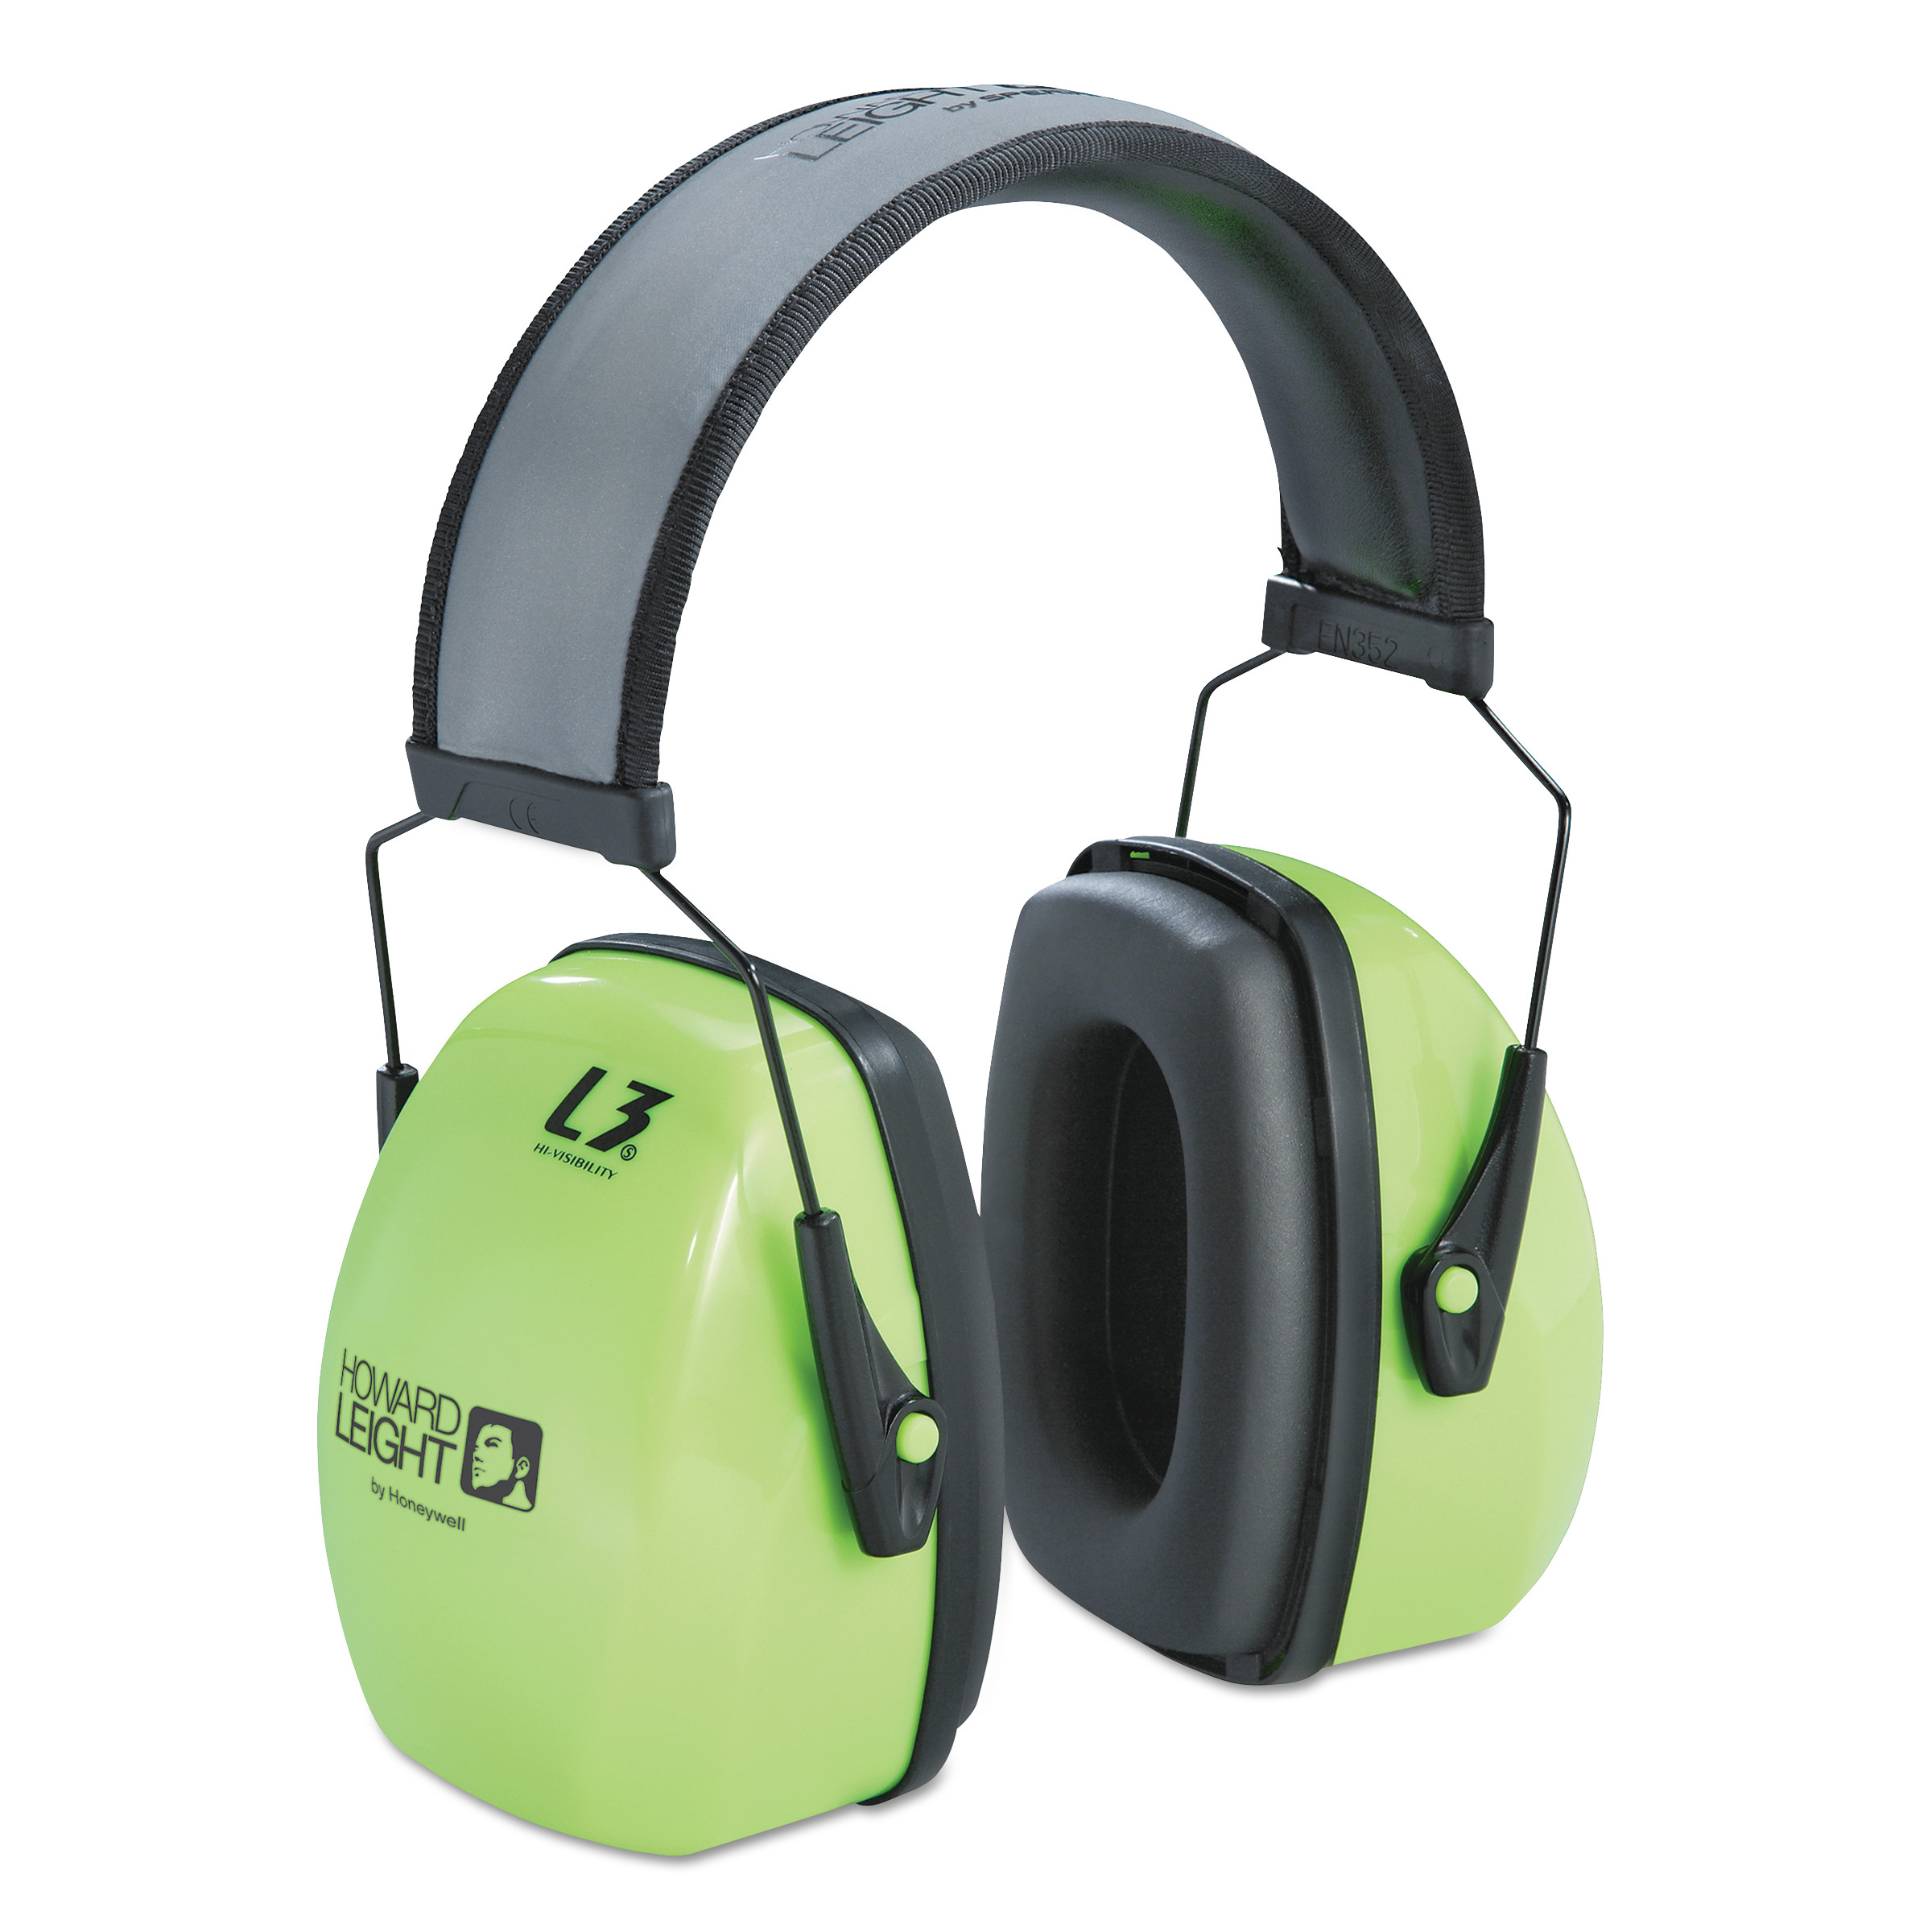 L3HV Hi-Visibility Earmuffs, Reflective Headband, 30NRR, Green/Black